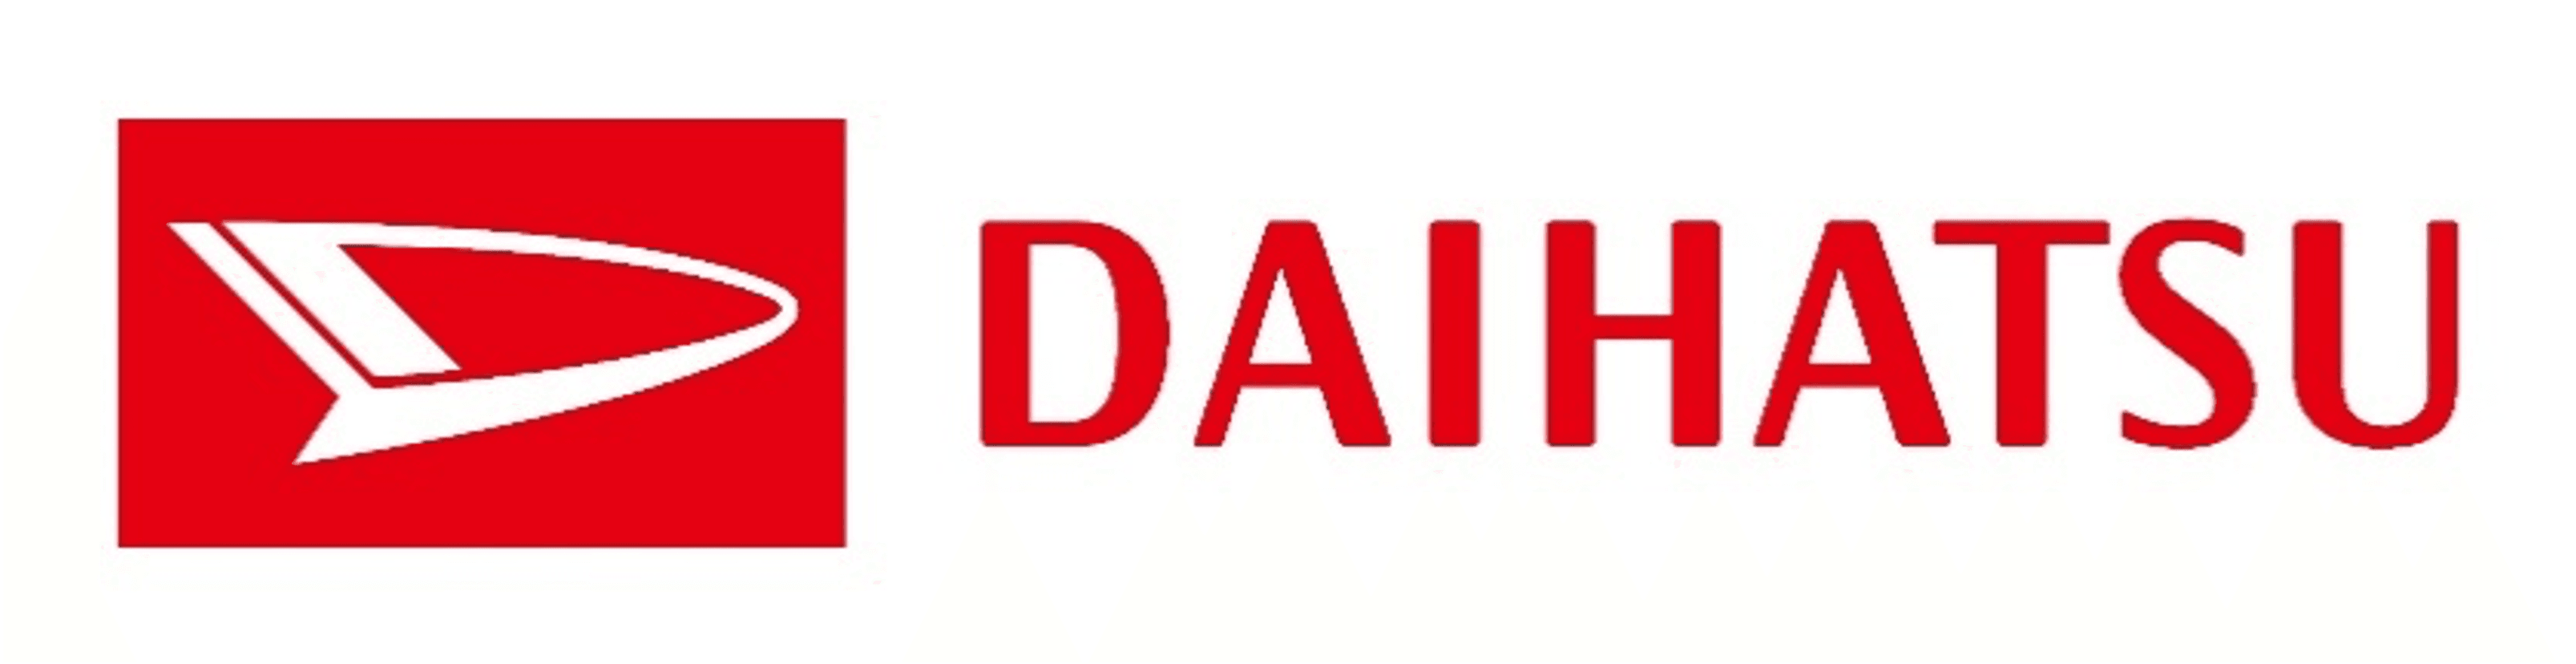 Daihatsu Motor Co., Ltd. logo